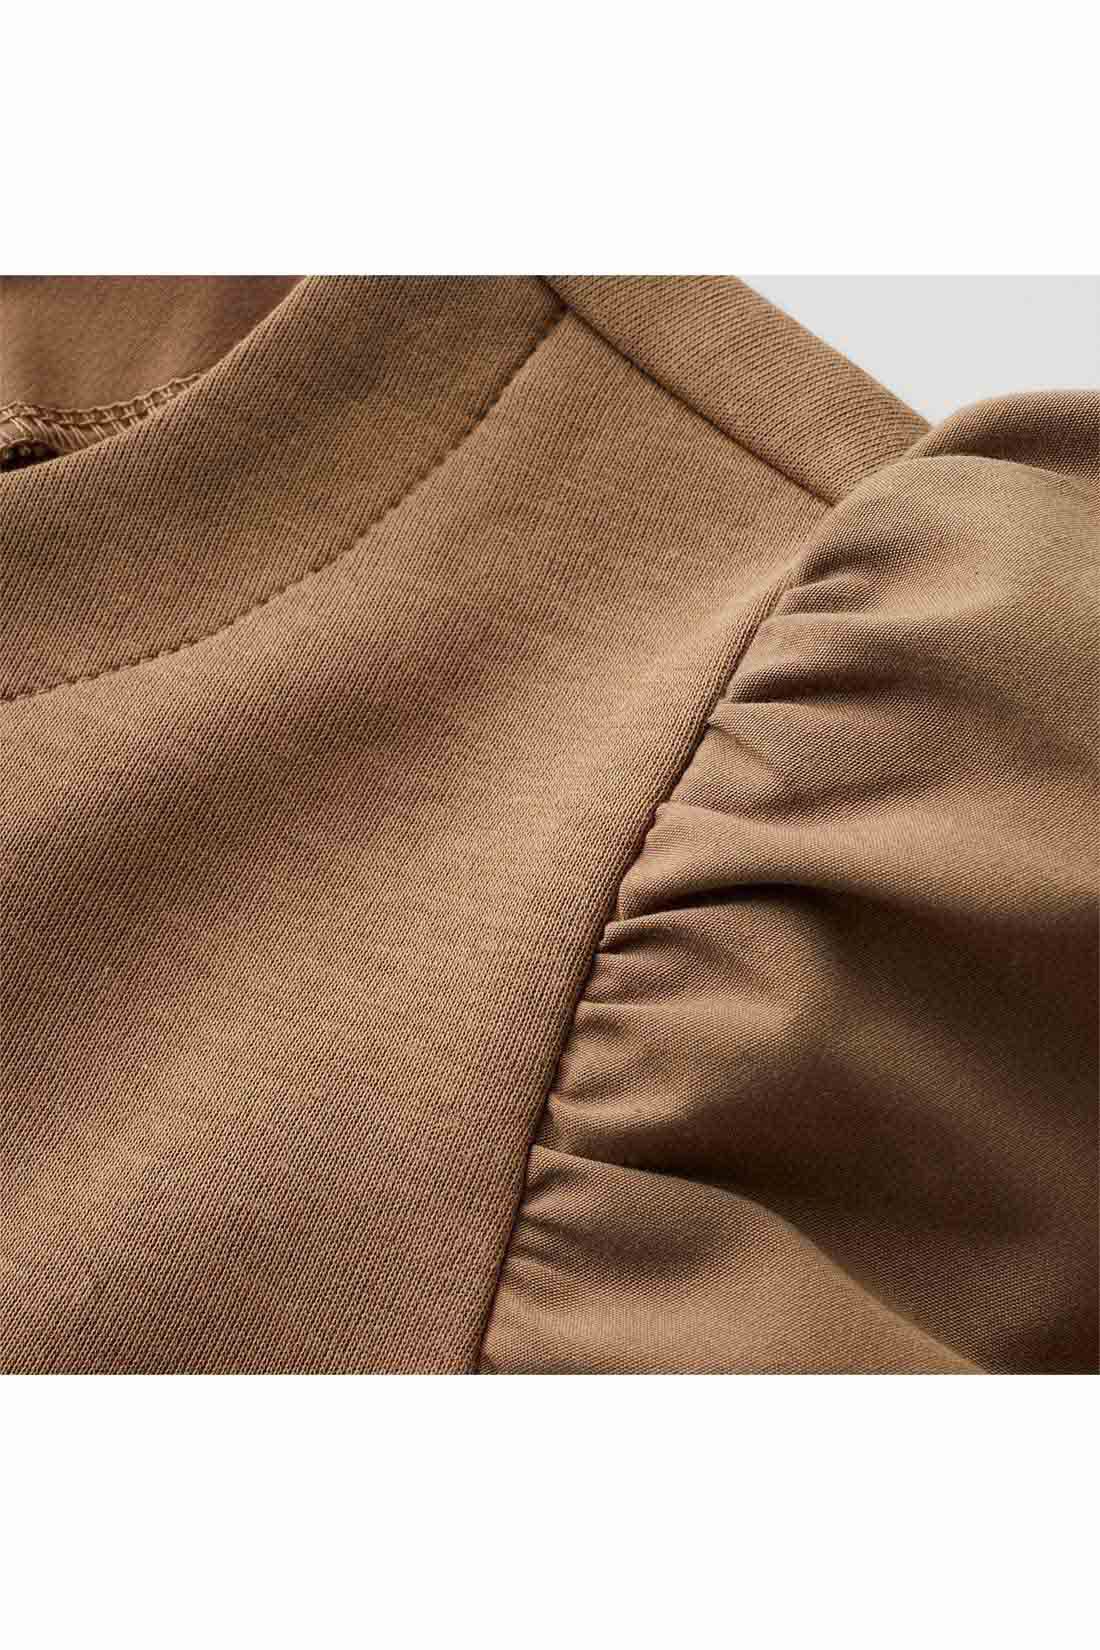 IEDIT[イディット]　ふんわり袖デザインが華やかな 異素材切り替えプルオーバー〈ブラック〉|袖は張り感のある布はく素材で軽やかに。身ごろはほどよく厚みがあり表面感のきれいなカットソー素材。